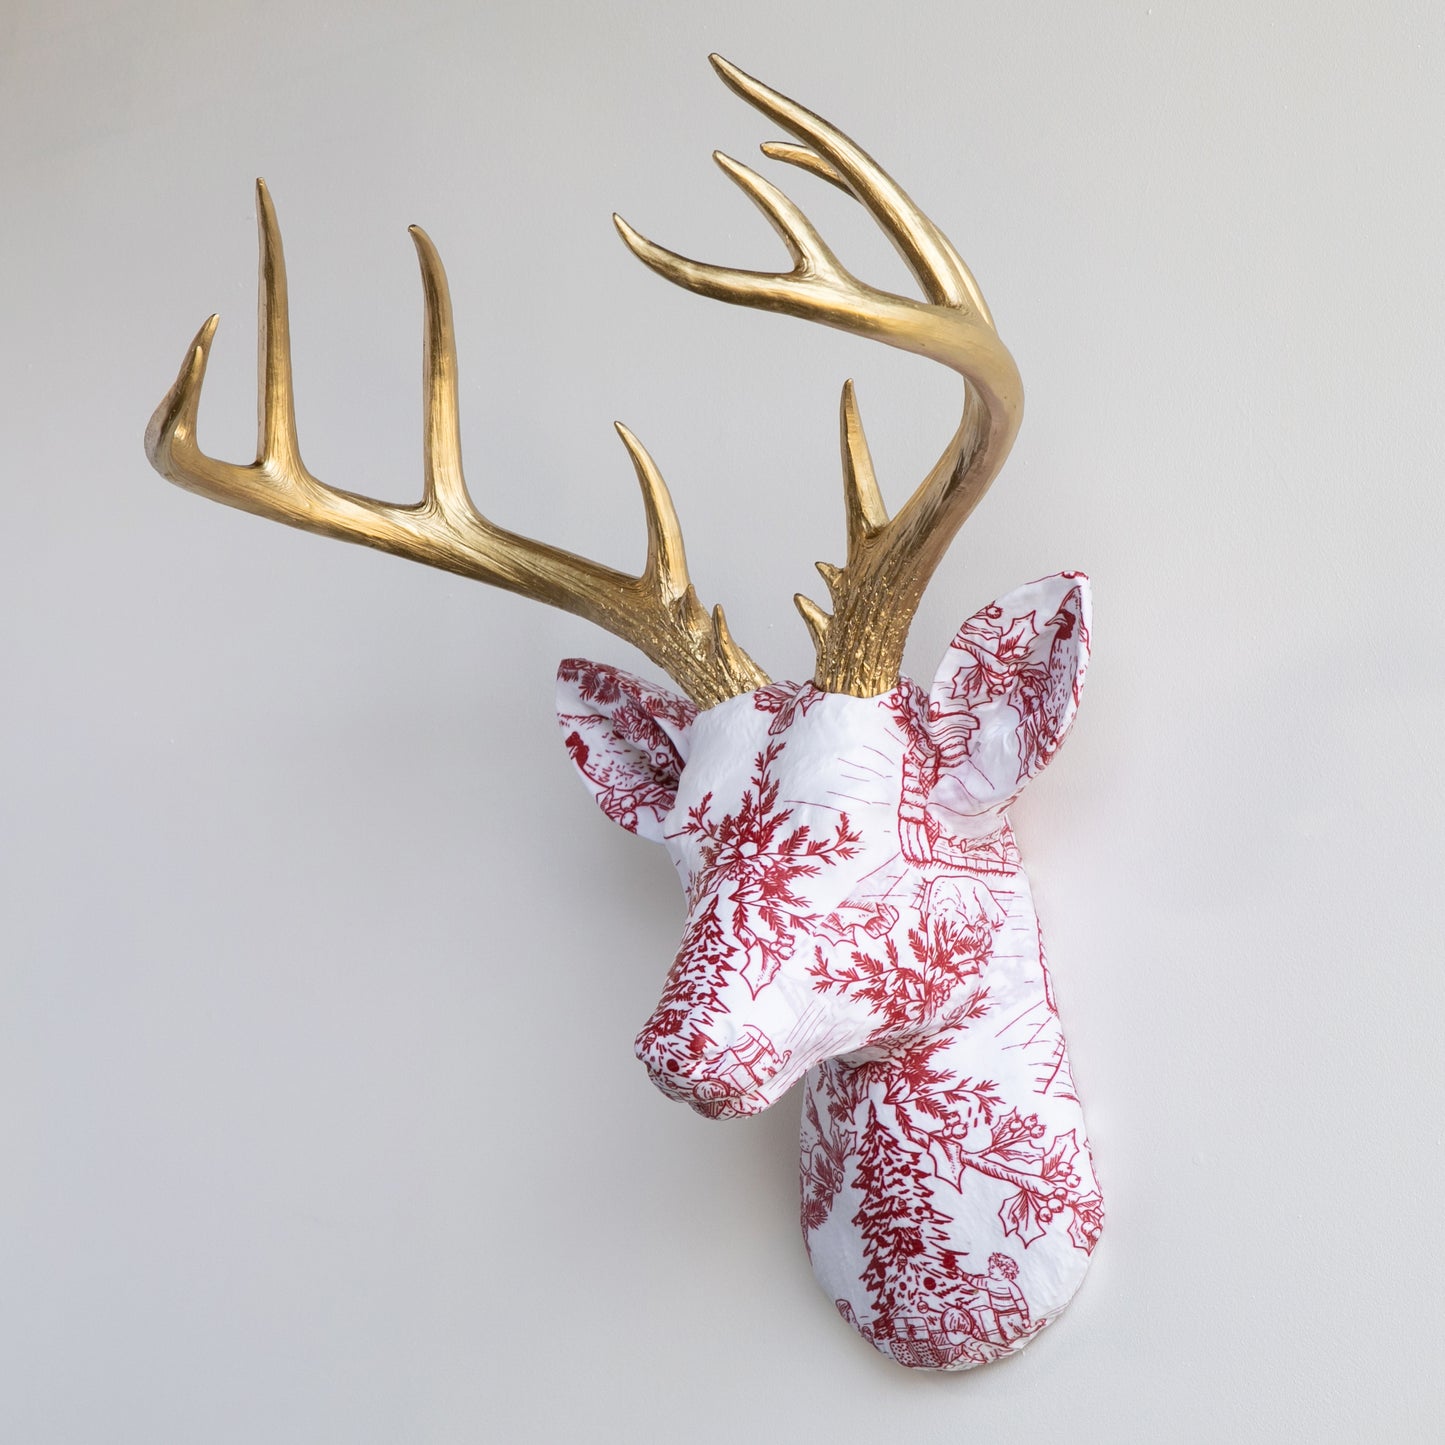 Fabric Deer Head - Christmas Toile Fabric Deer Head